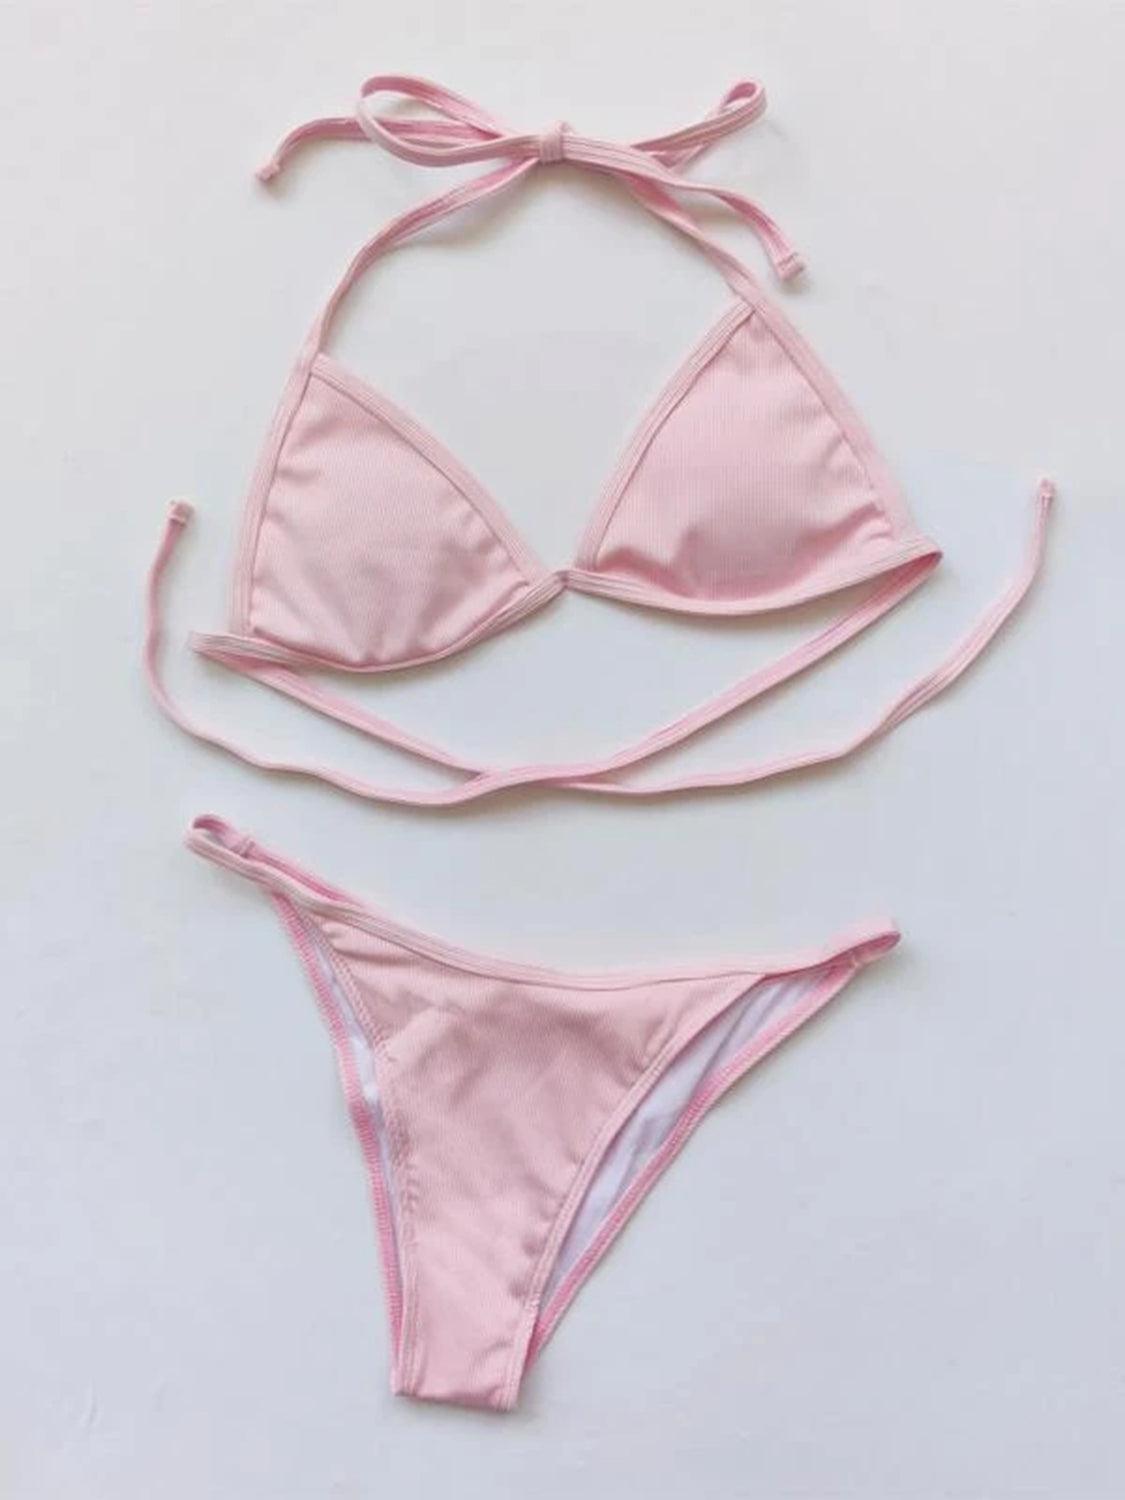 a pink bikini top with a tie around it